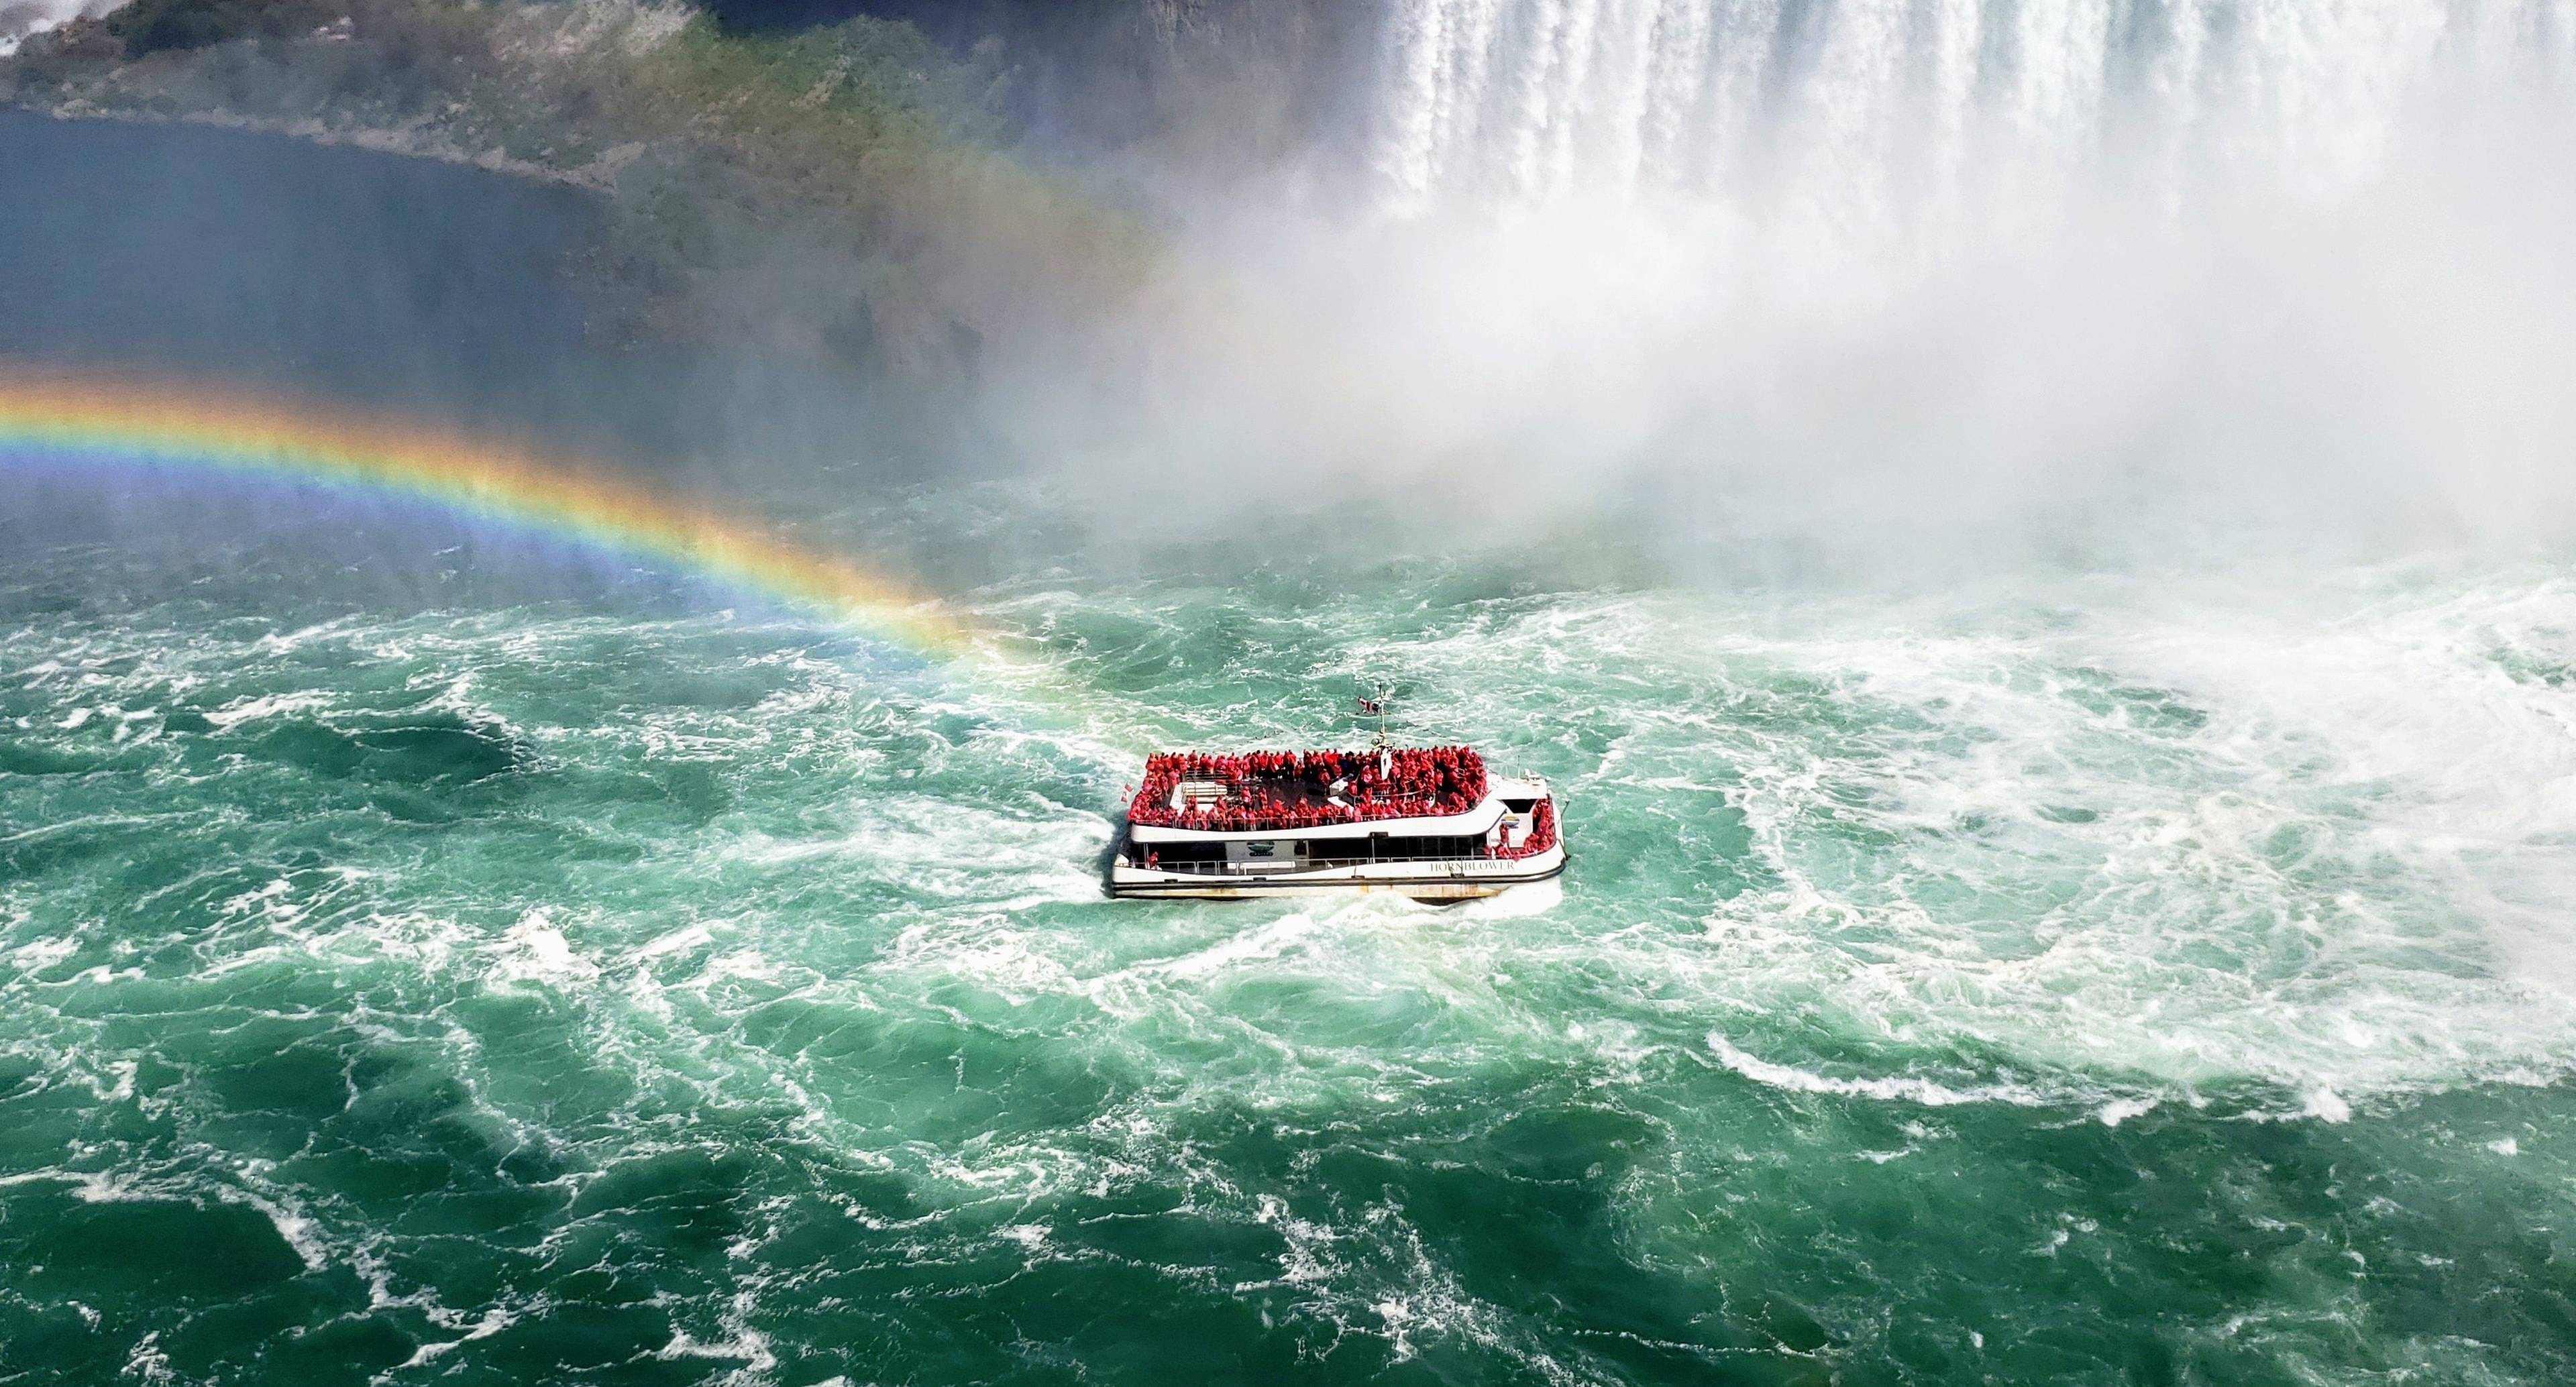 A Magical Day in Niagara Falls